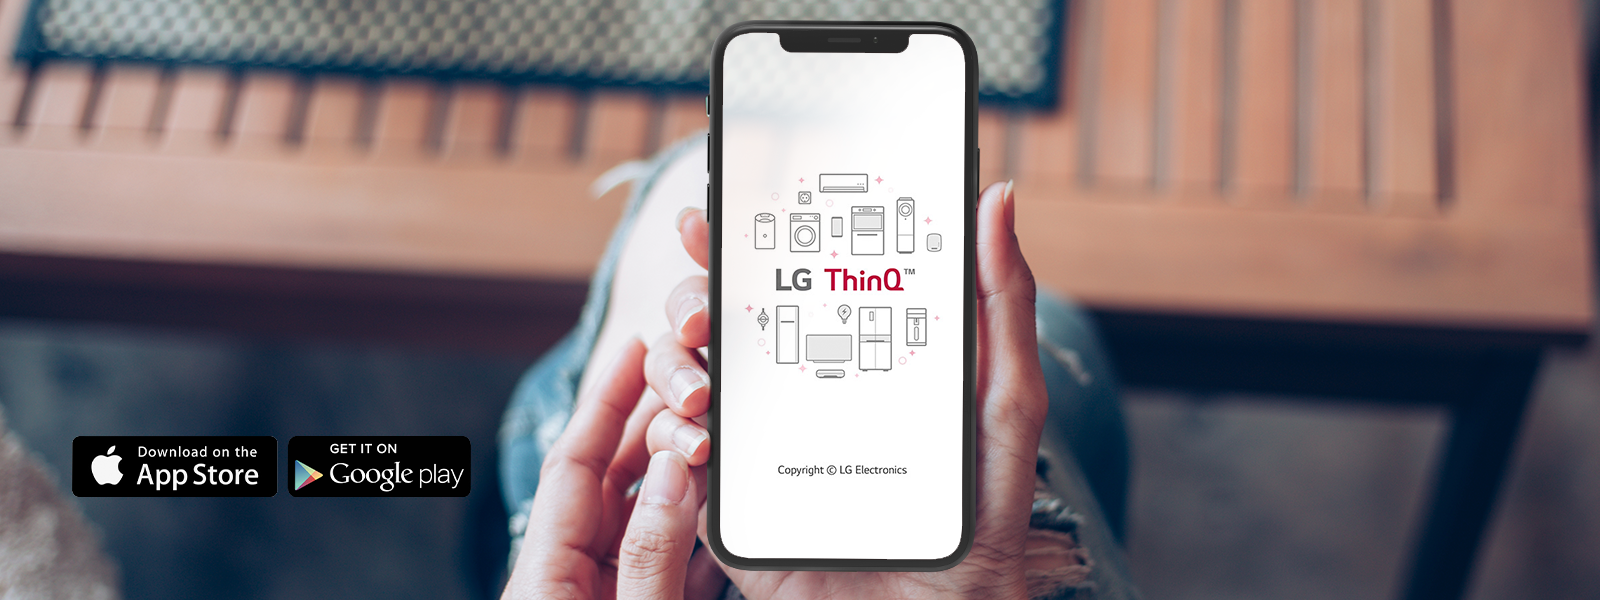 LG ThinQ手機應用程式  帶領用家邁進智能家居新時代 